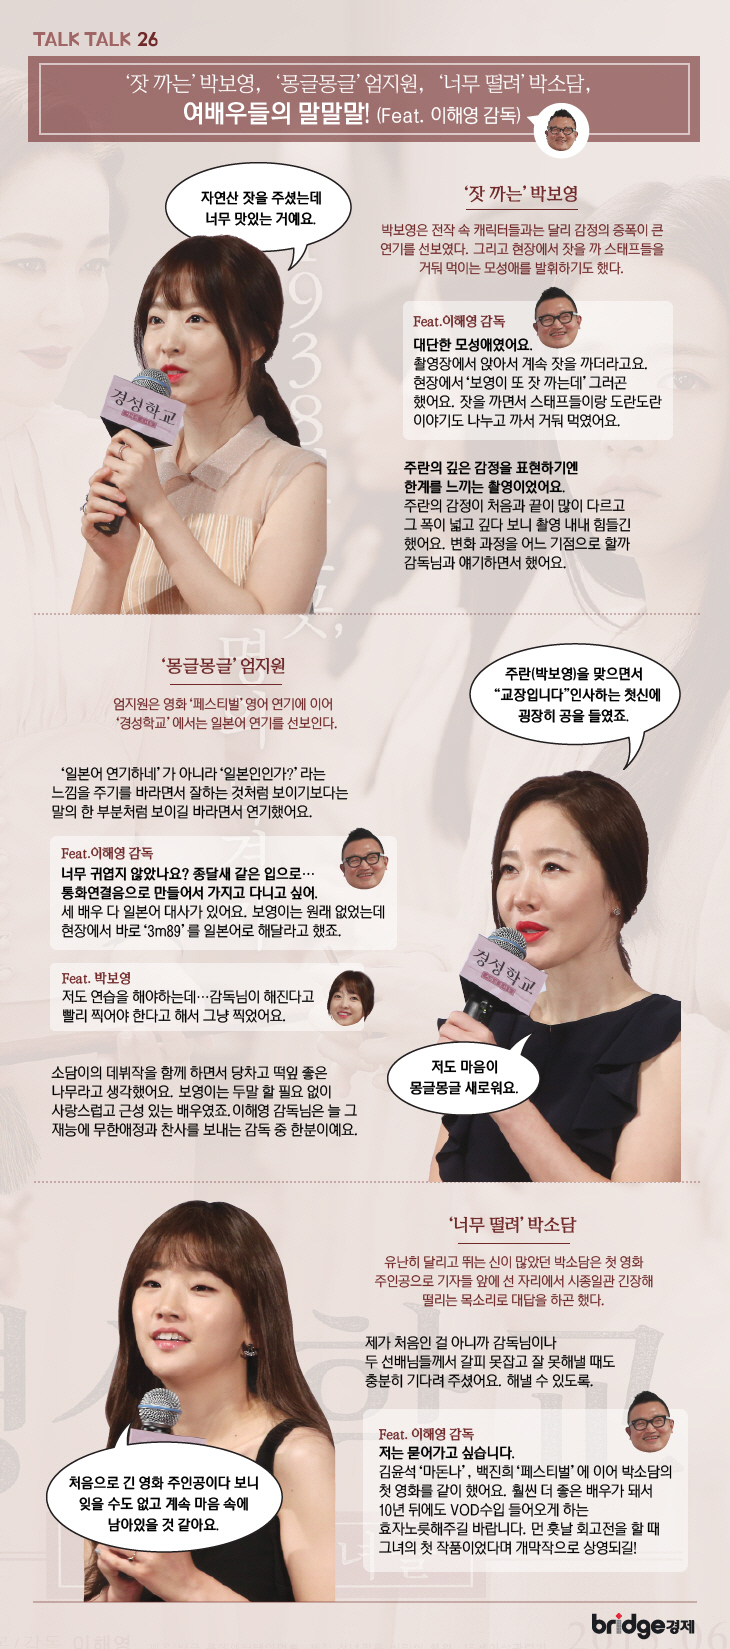 [Talk Talk] '경성학교' 여배우들의 말말말, ‘잣 까는' 박보영, '몽글몽글' 엄지원, '너무 떨려' 박소담